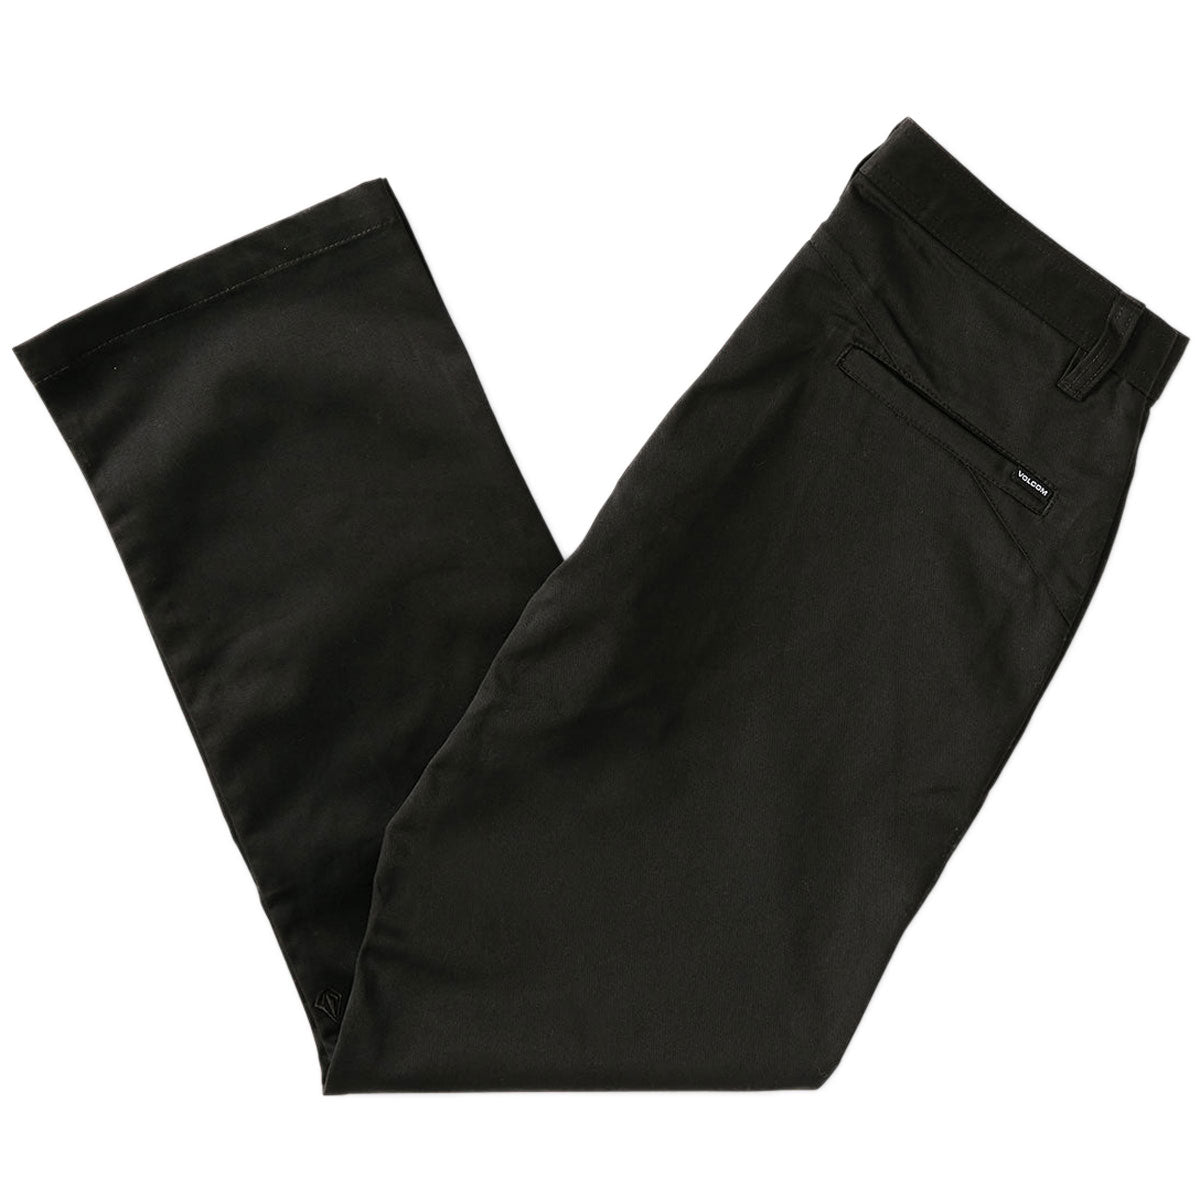 Volcom Frickin Skate Chino Pants - Black/Black image 2